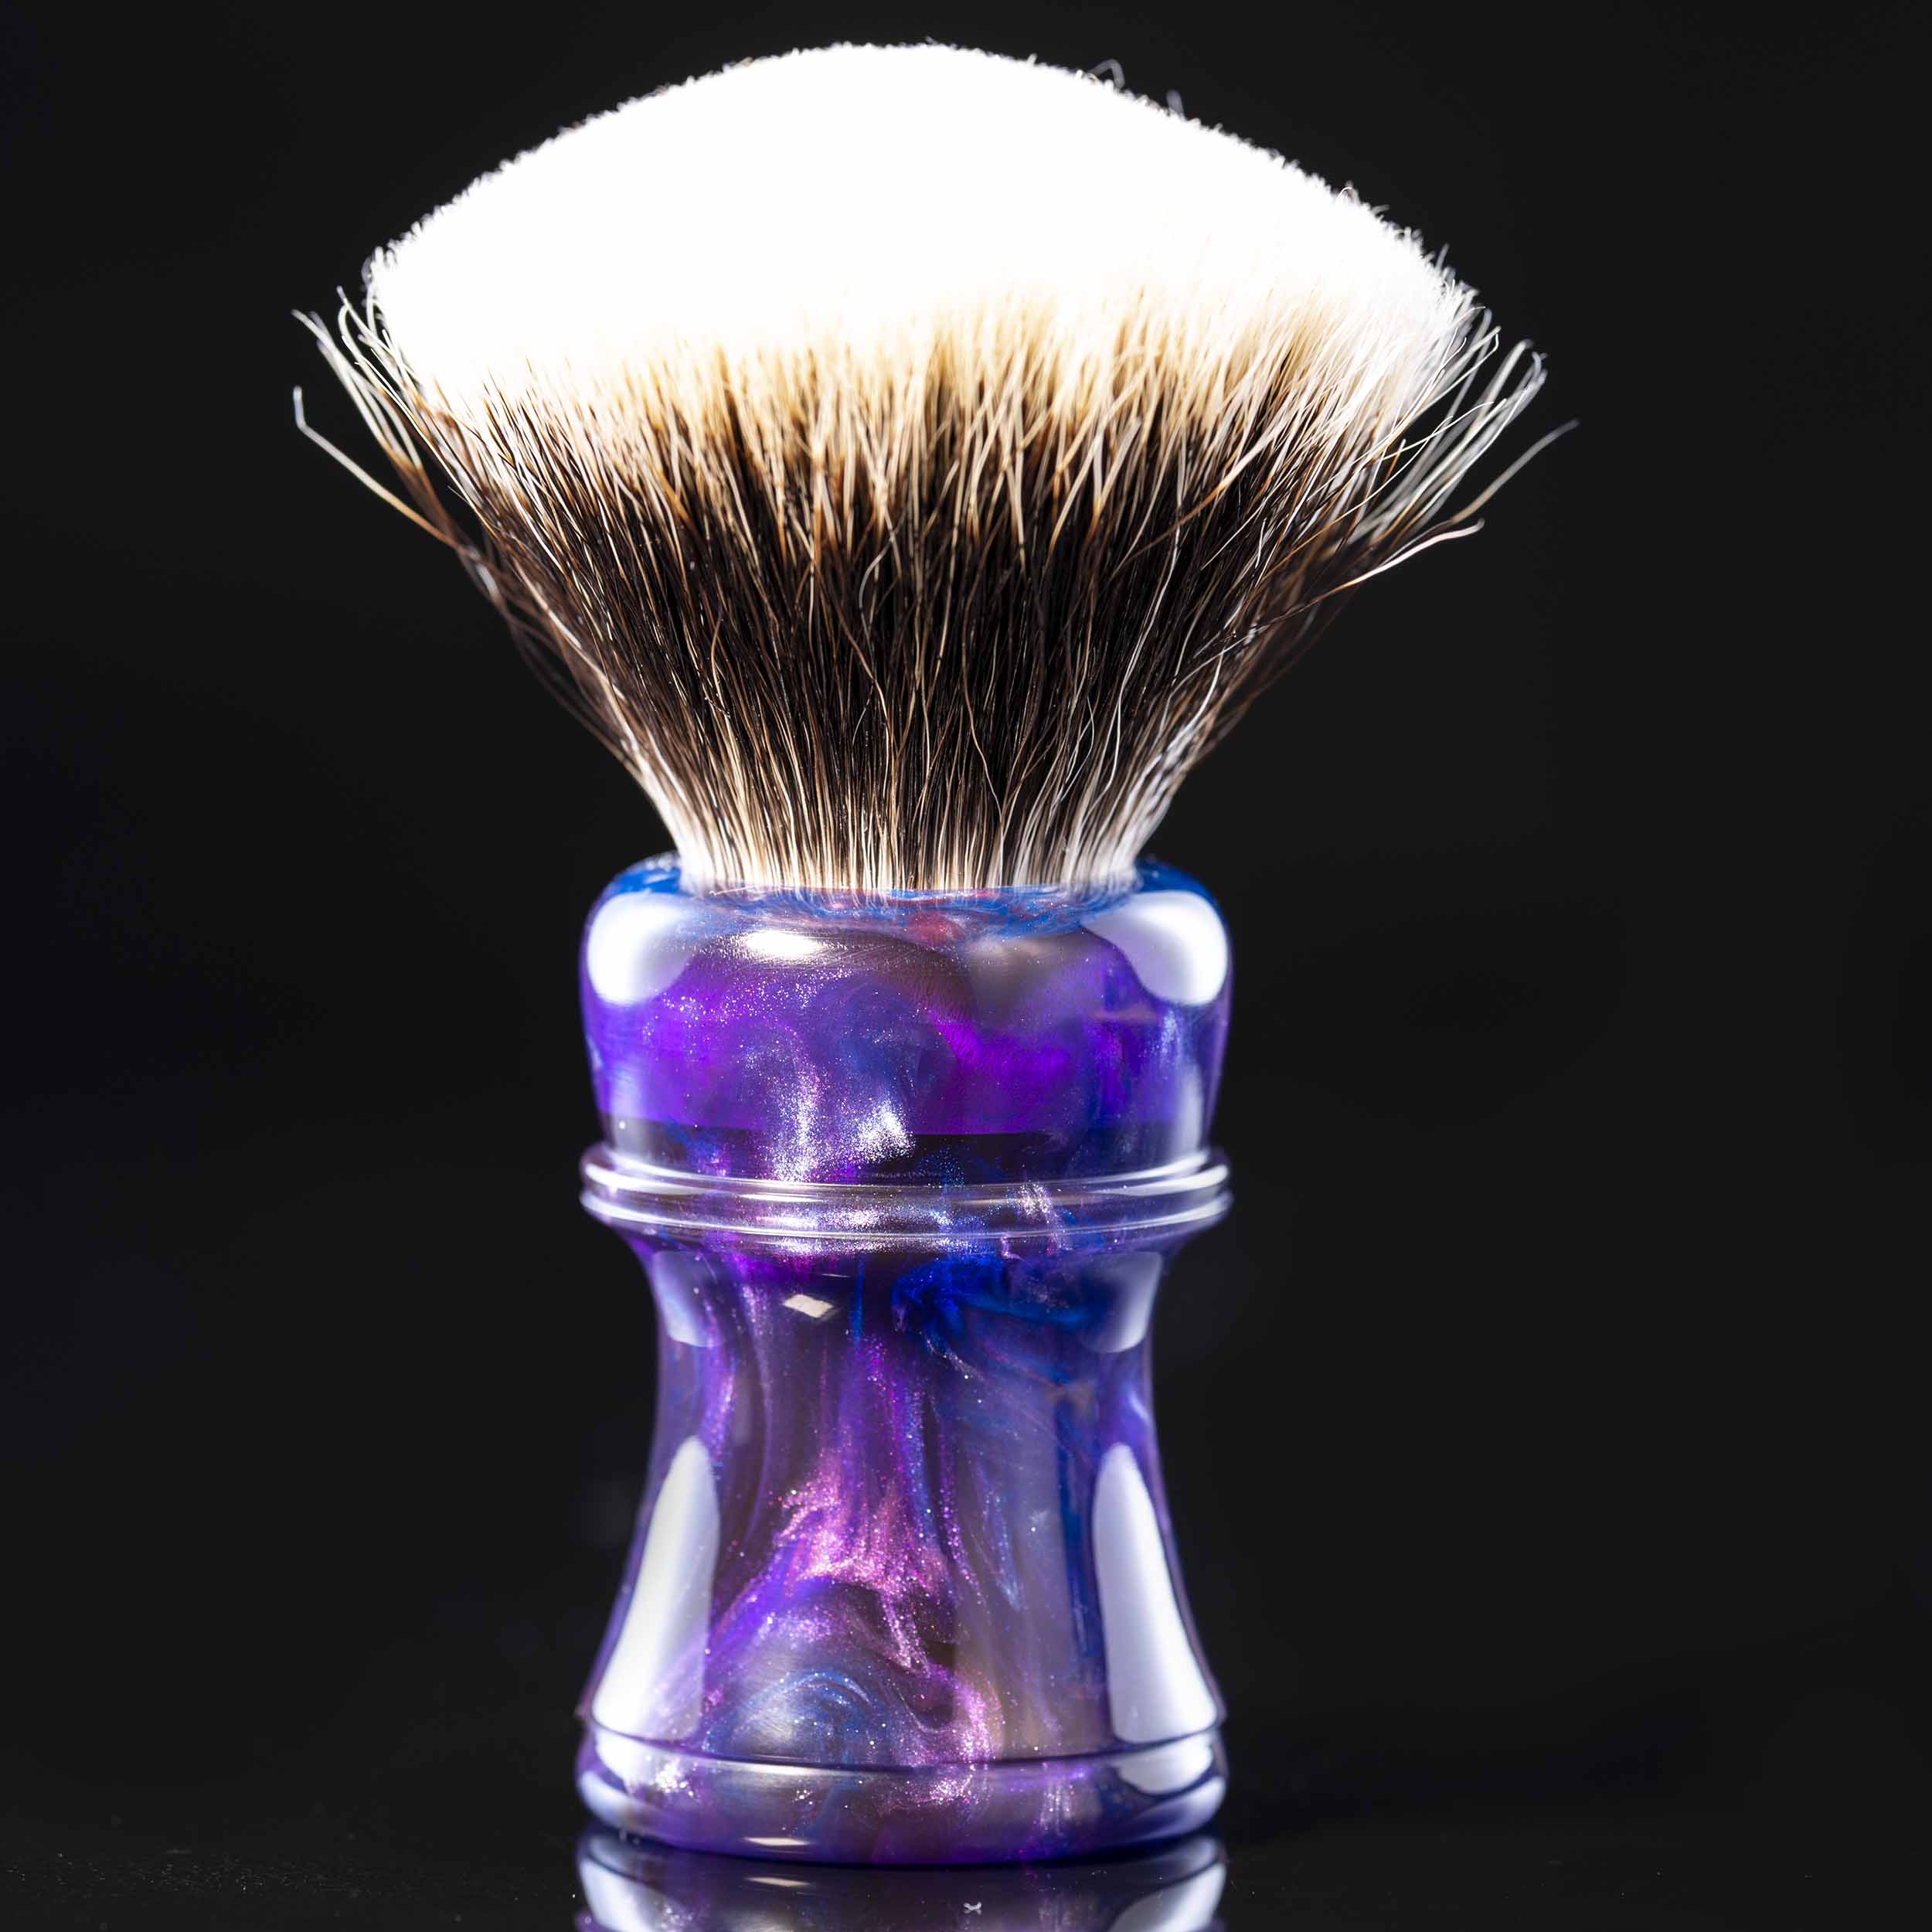 Handmade Shaving Brush "Purple Rain" in polished purple, blue and silver resin